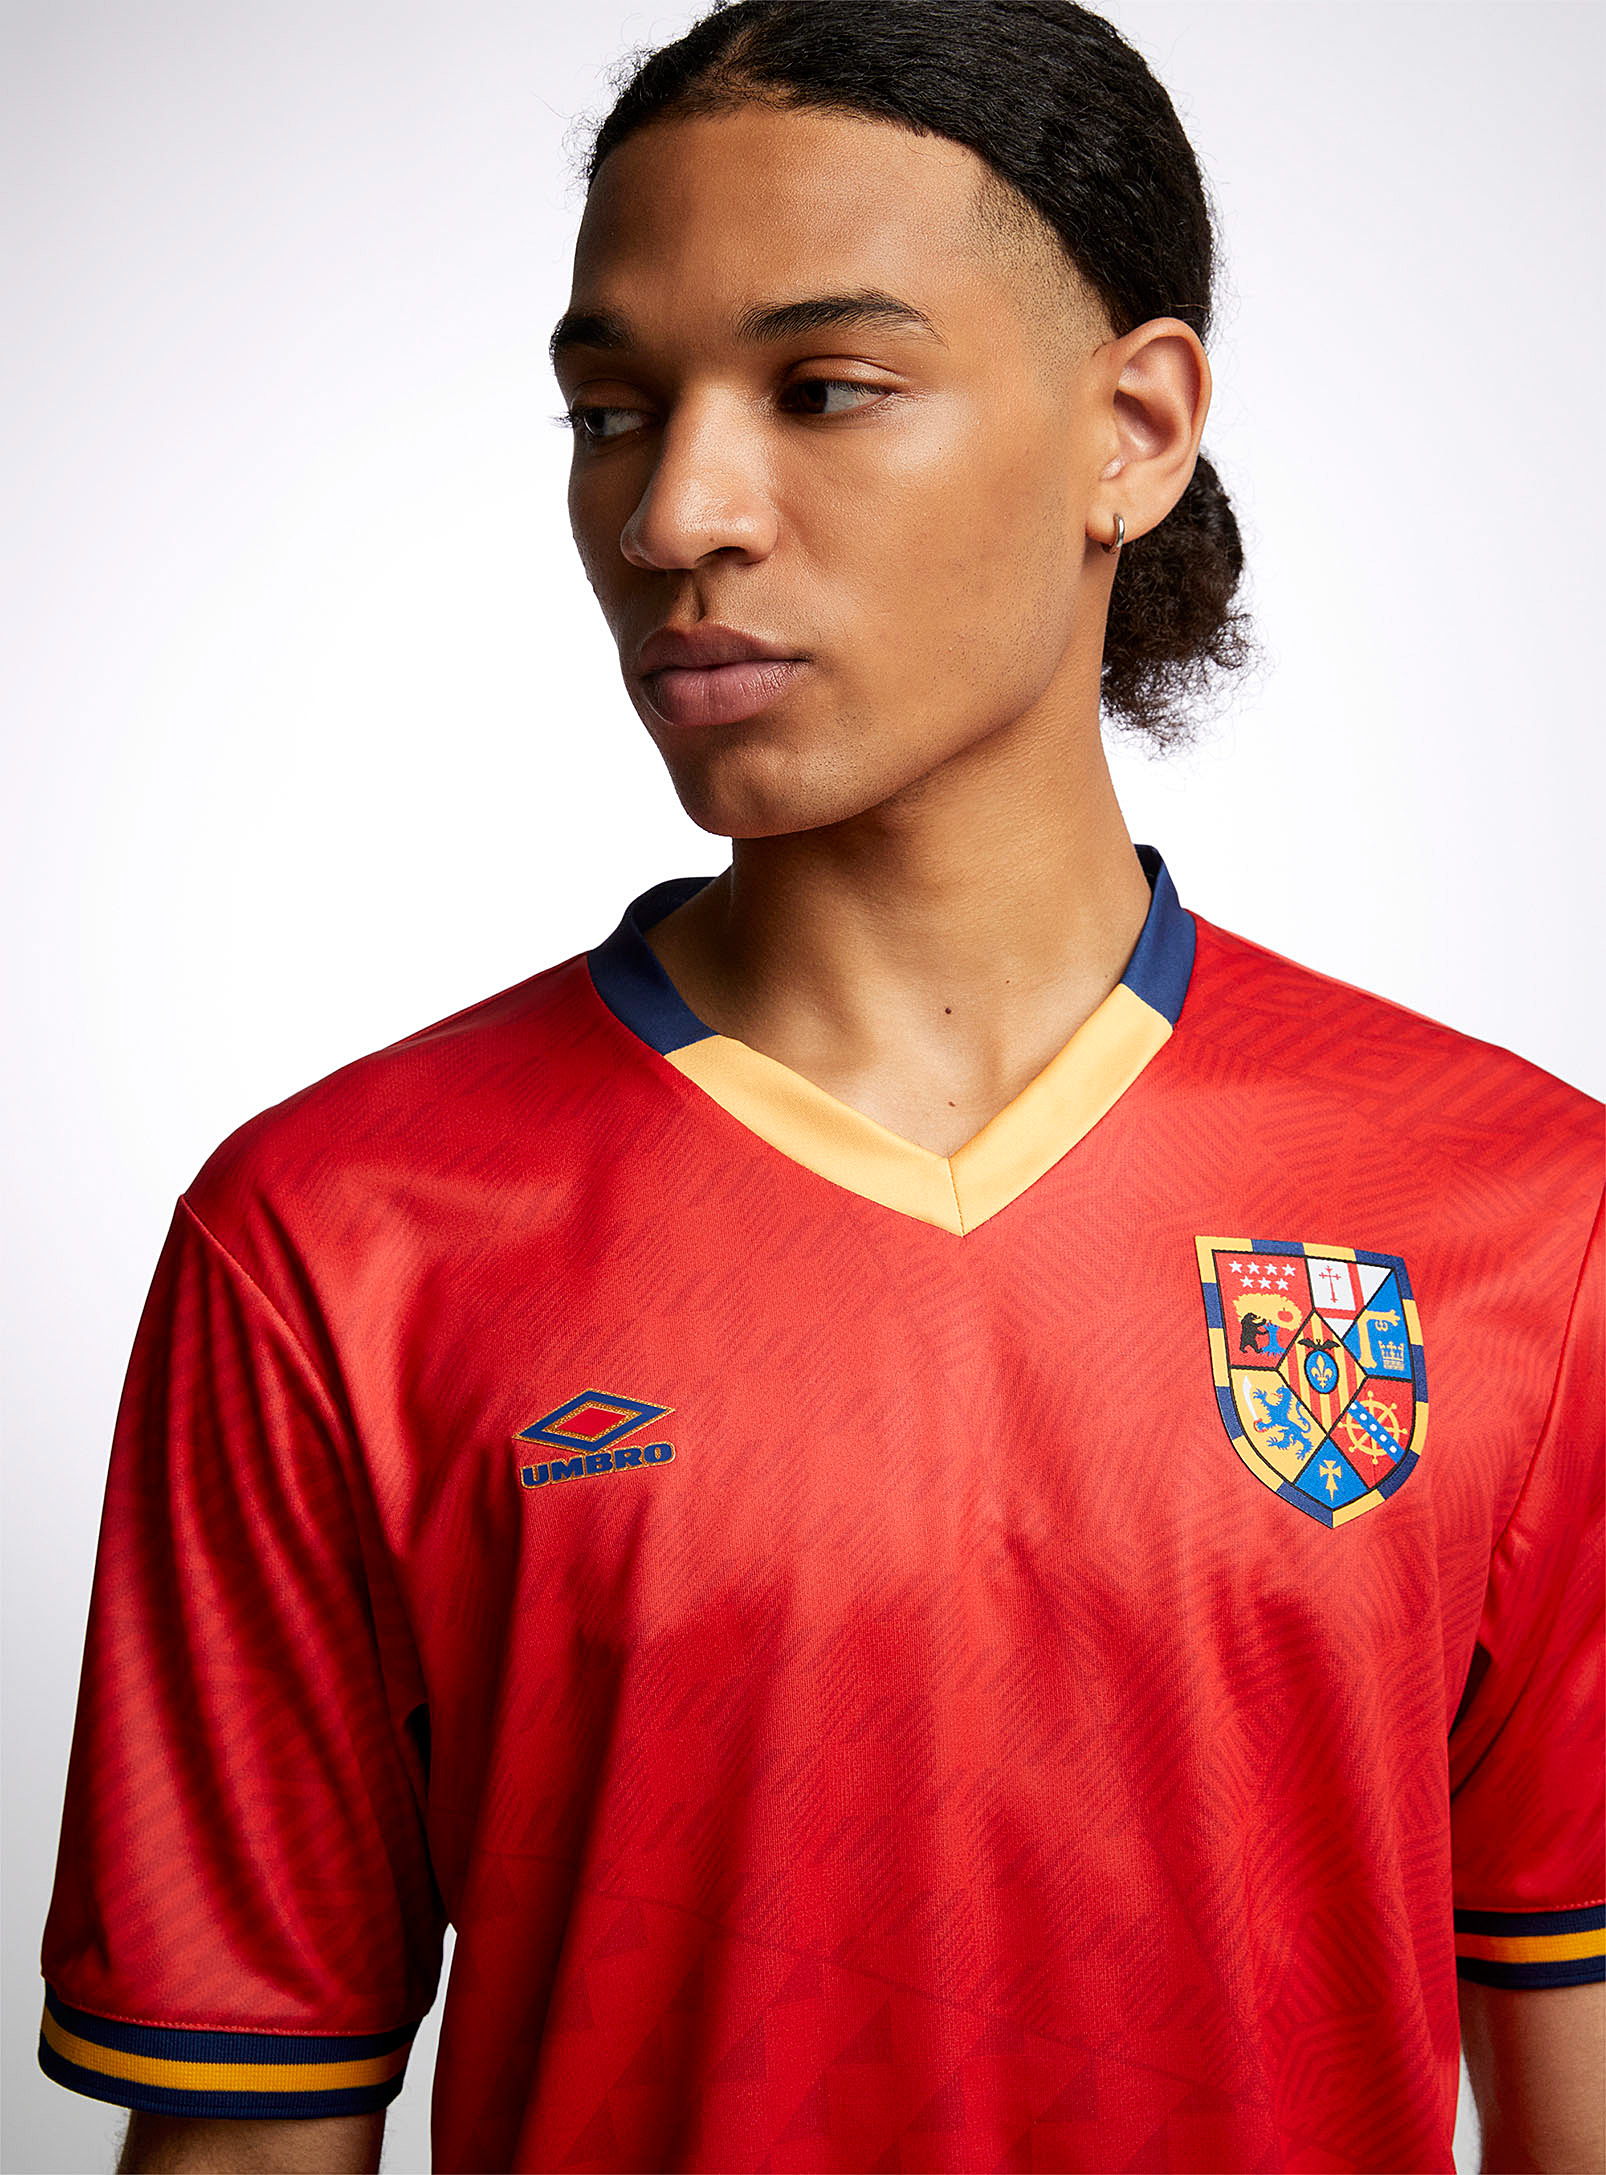 Umbro - Men's Spain soccer jersey